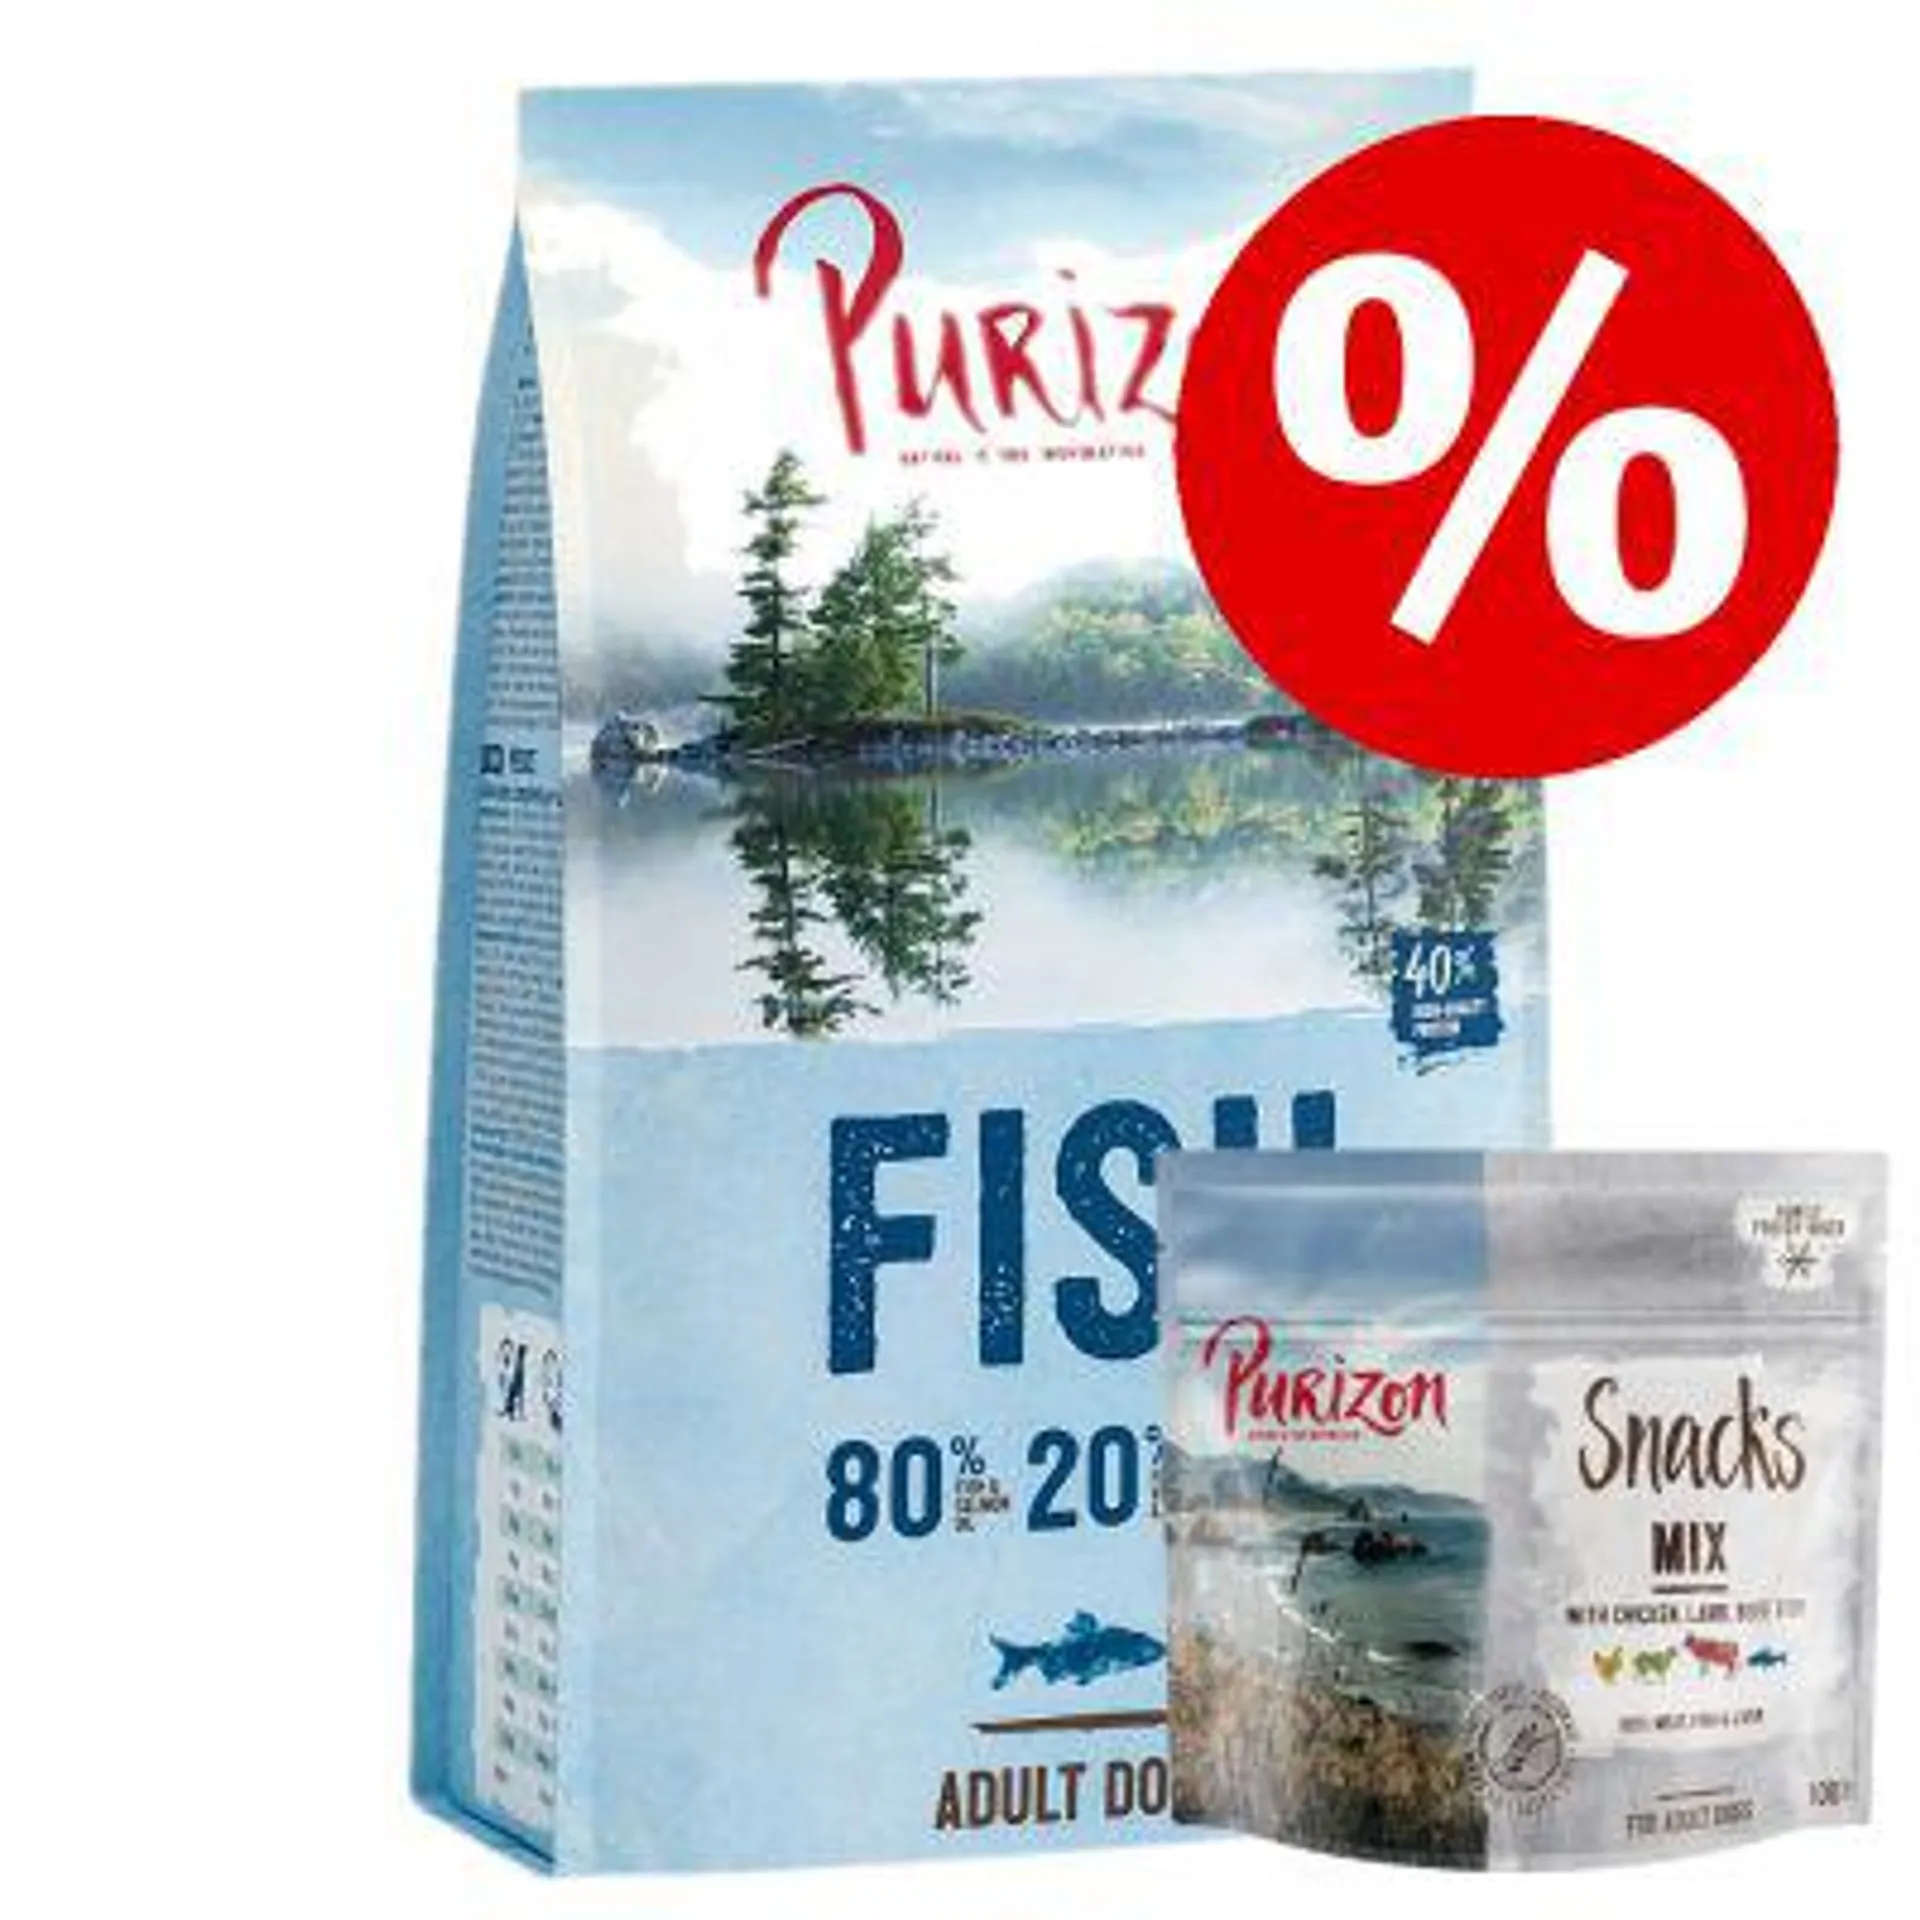 400g Purizon Trial Pack Dry Dog Food + 1x Grain-Free Mix Snacks - Bundle Pack!*